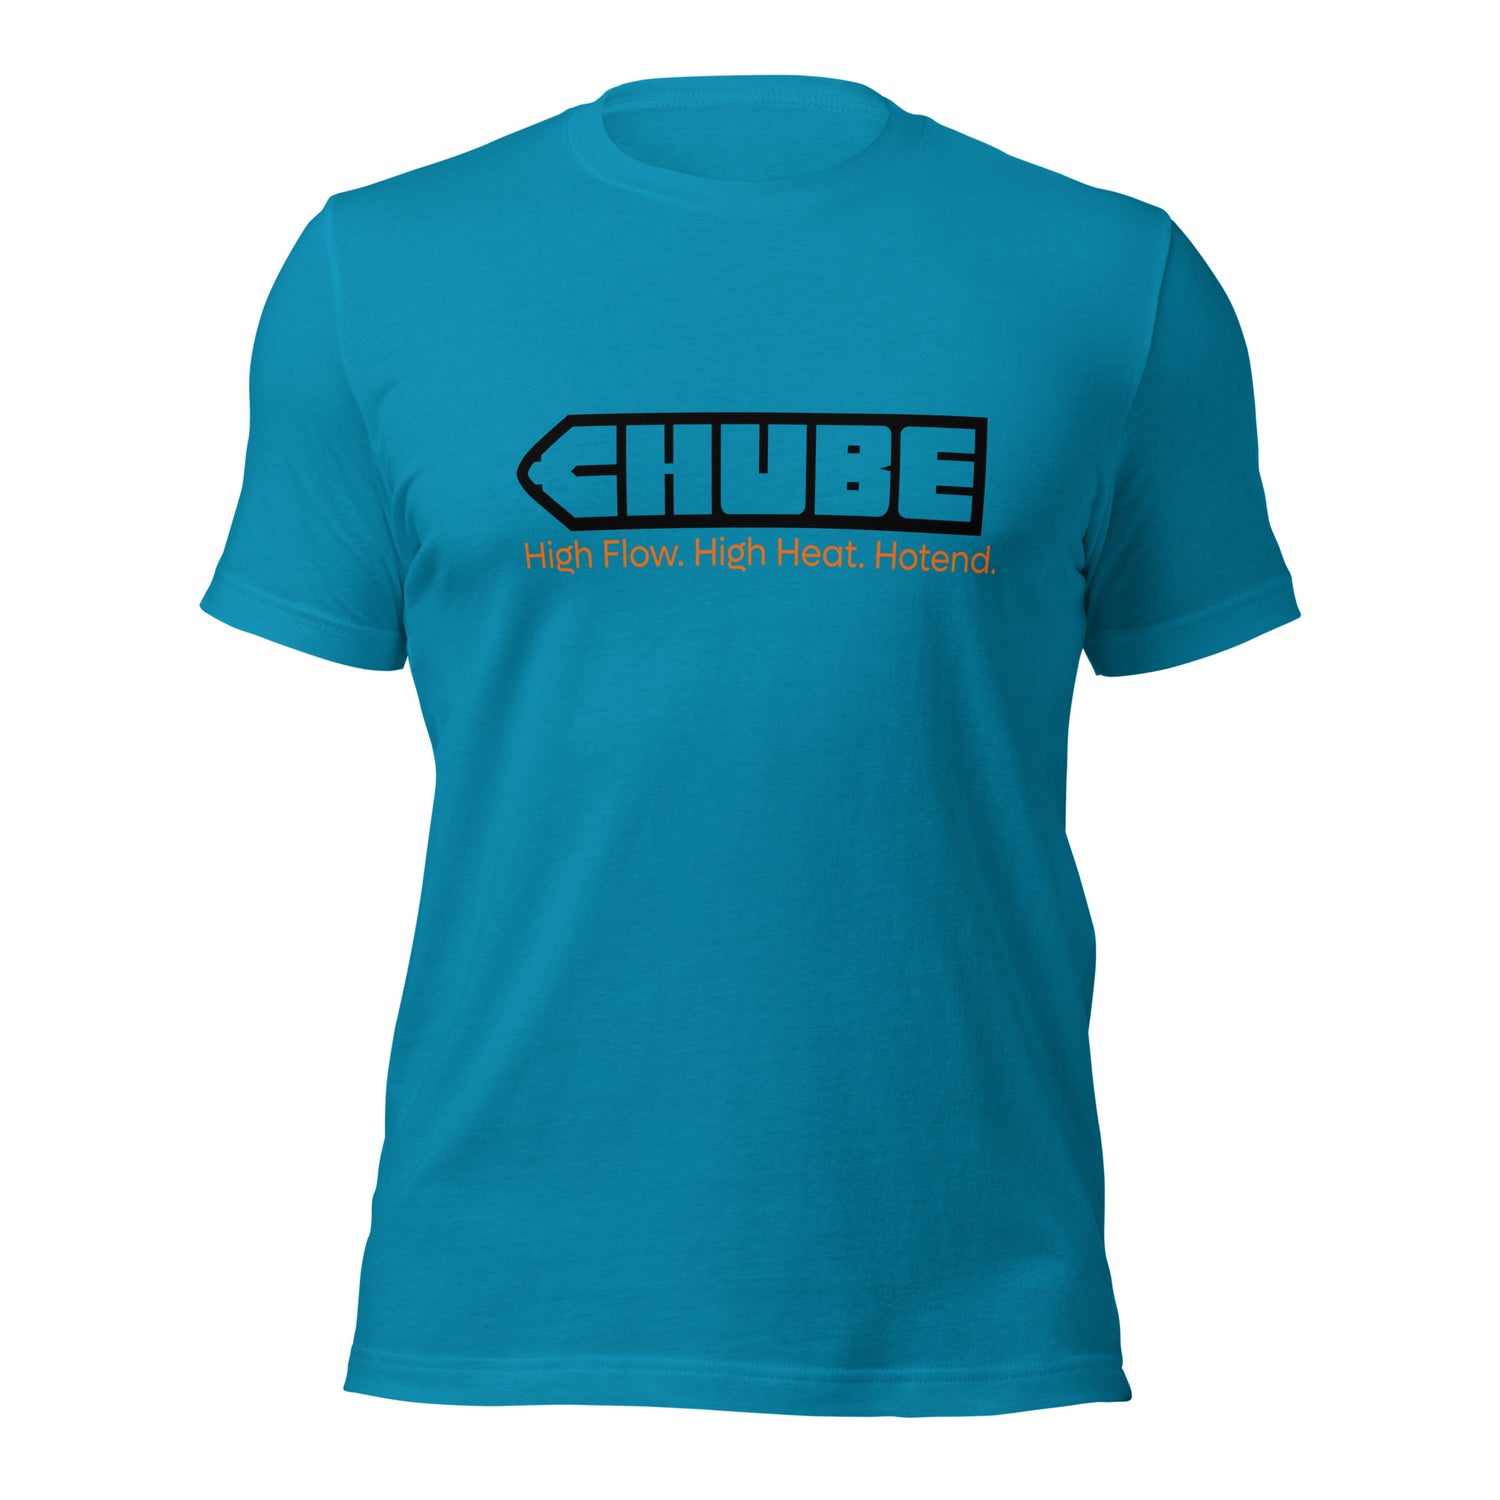 Chube T-Shirt